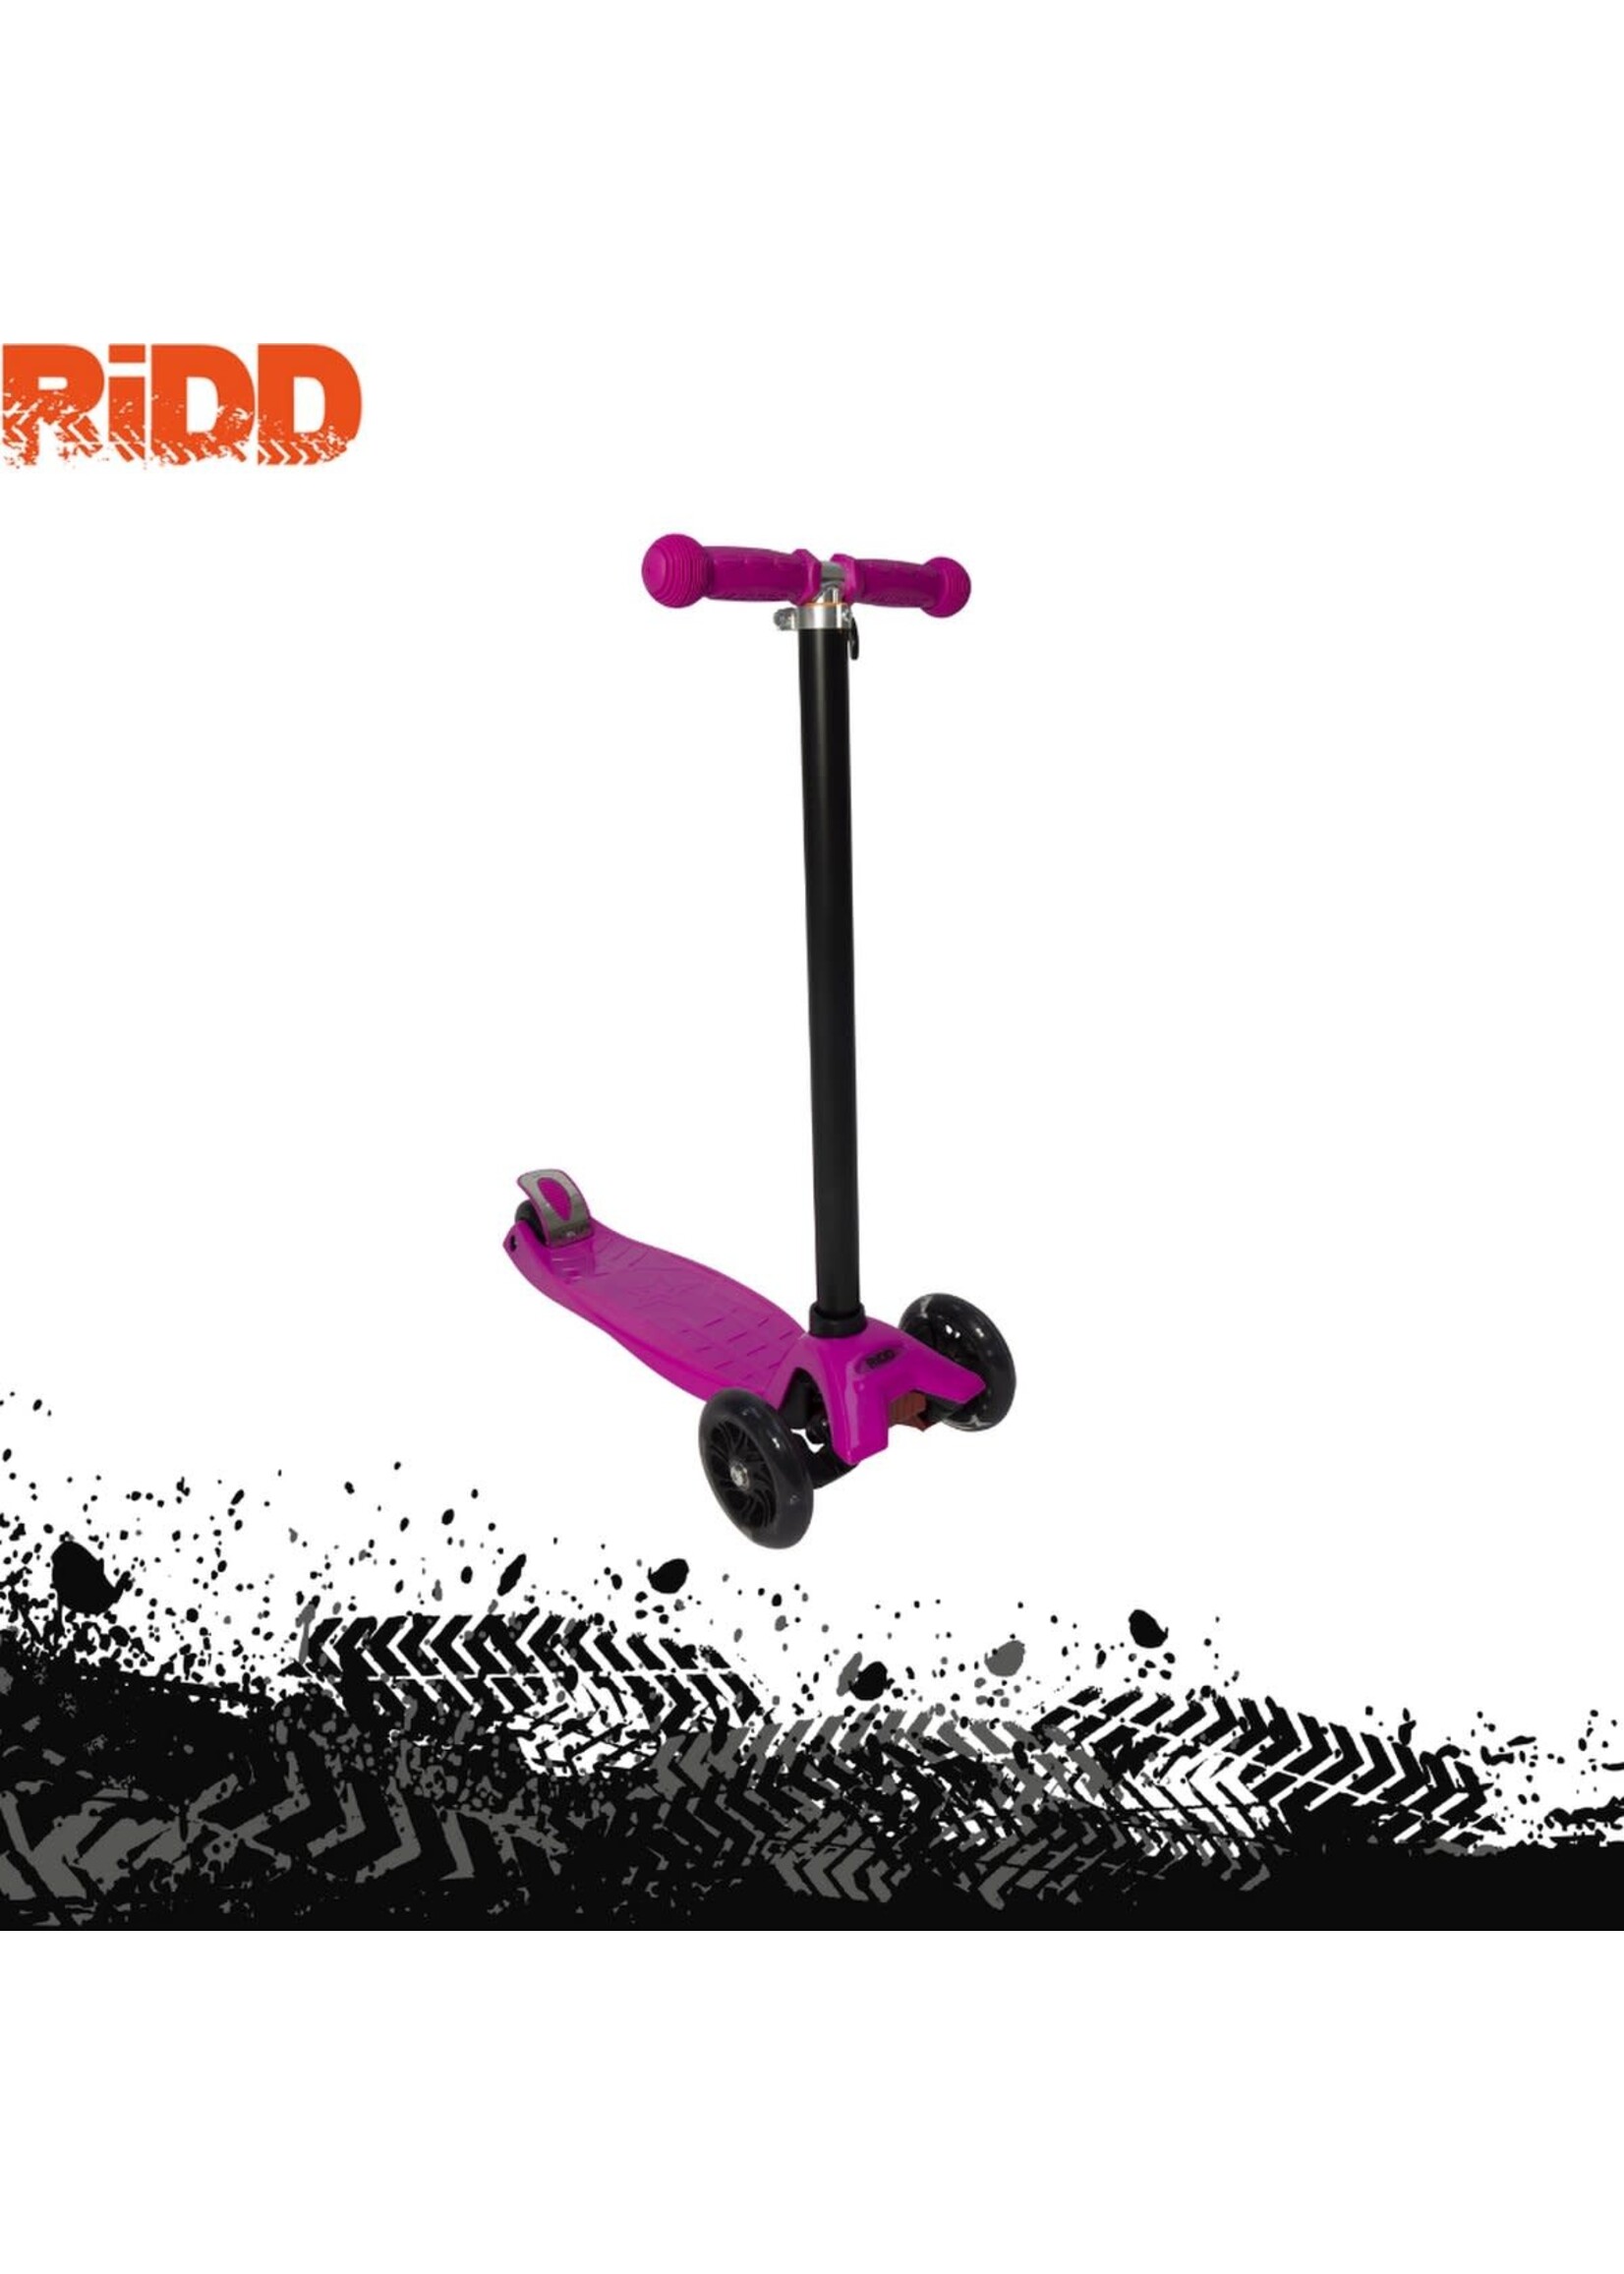 Ridd RiDD Kids Scooter - - Vanaf 3 jaar - 2 Achterwielen met LED verlichting